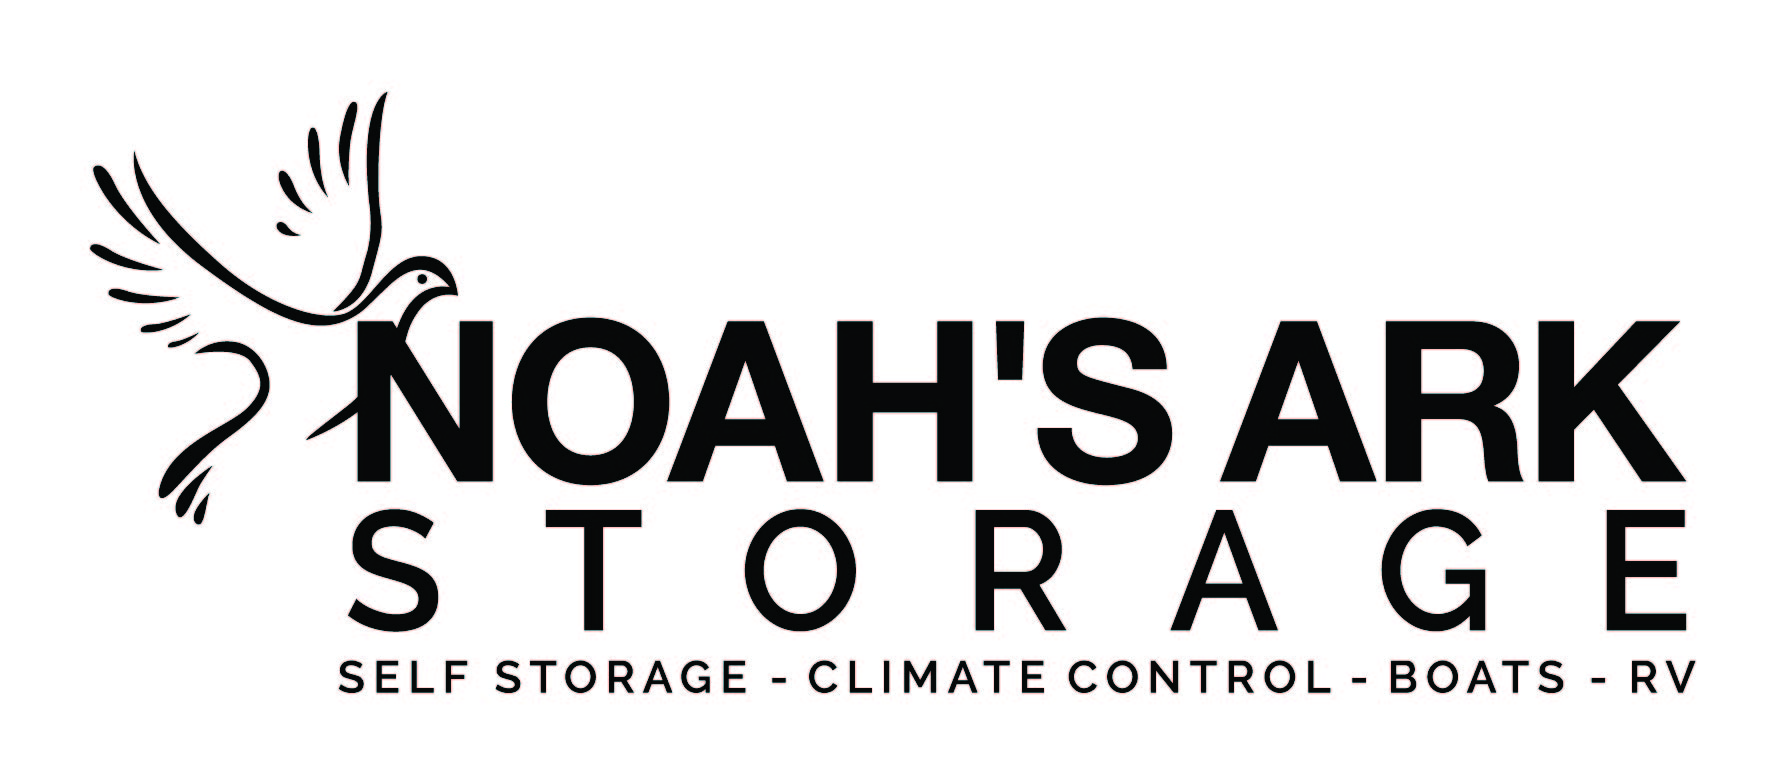 Self storage Somerset, Kentucky - Noah's Ark Storage